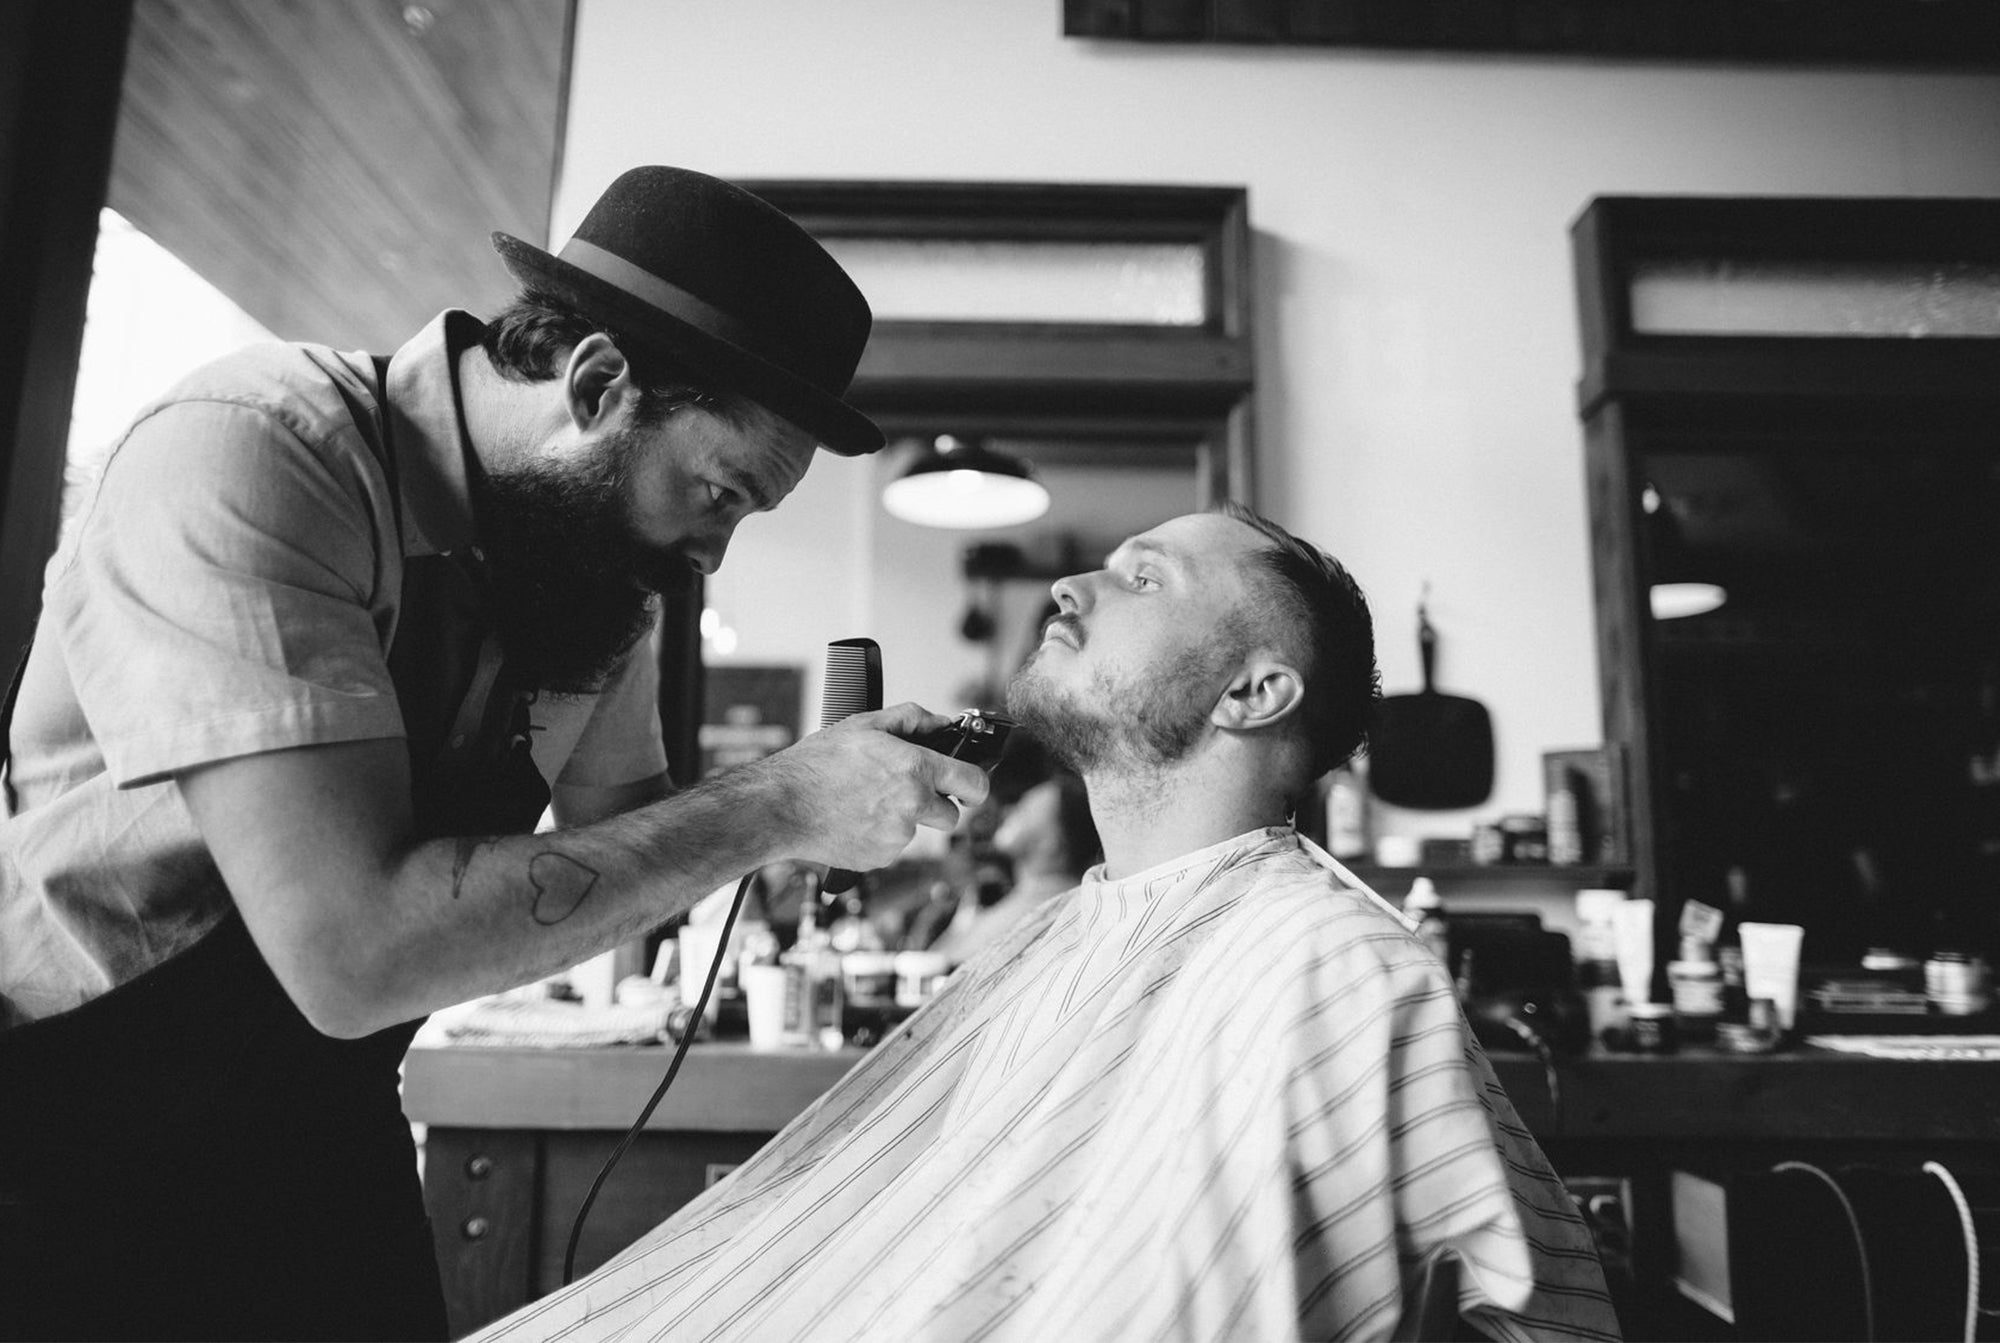 Meet the barber: Jay Gray